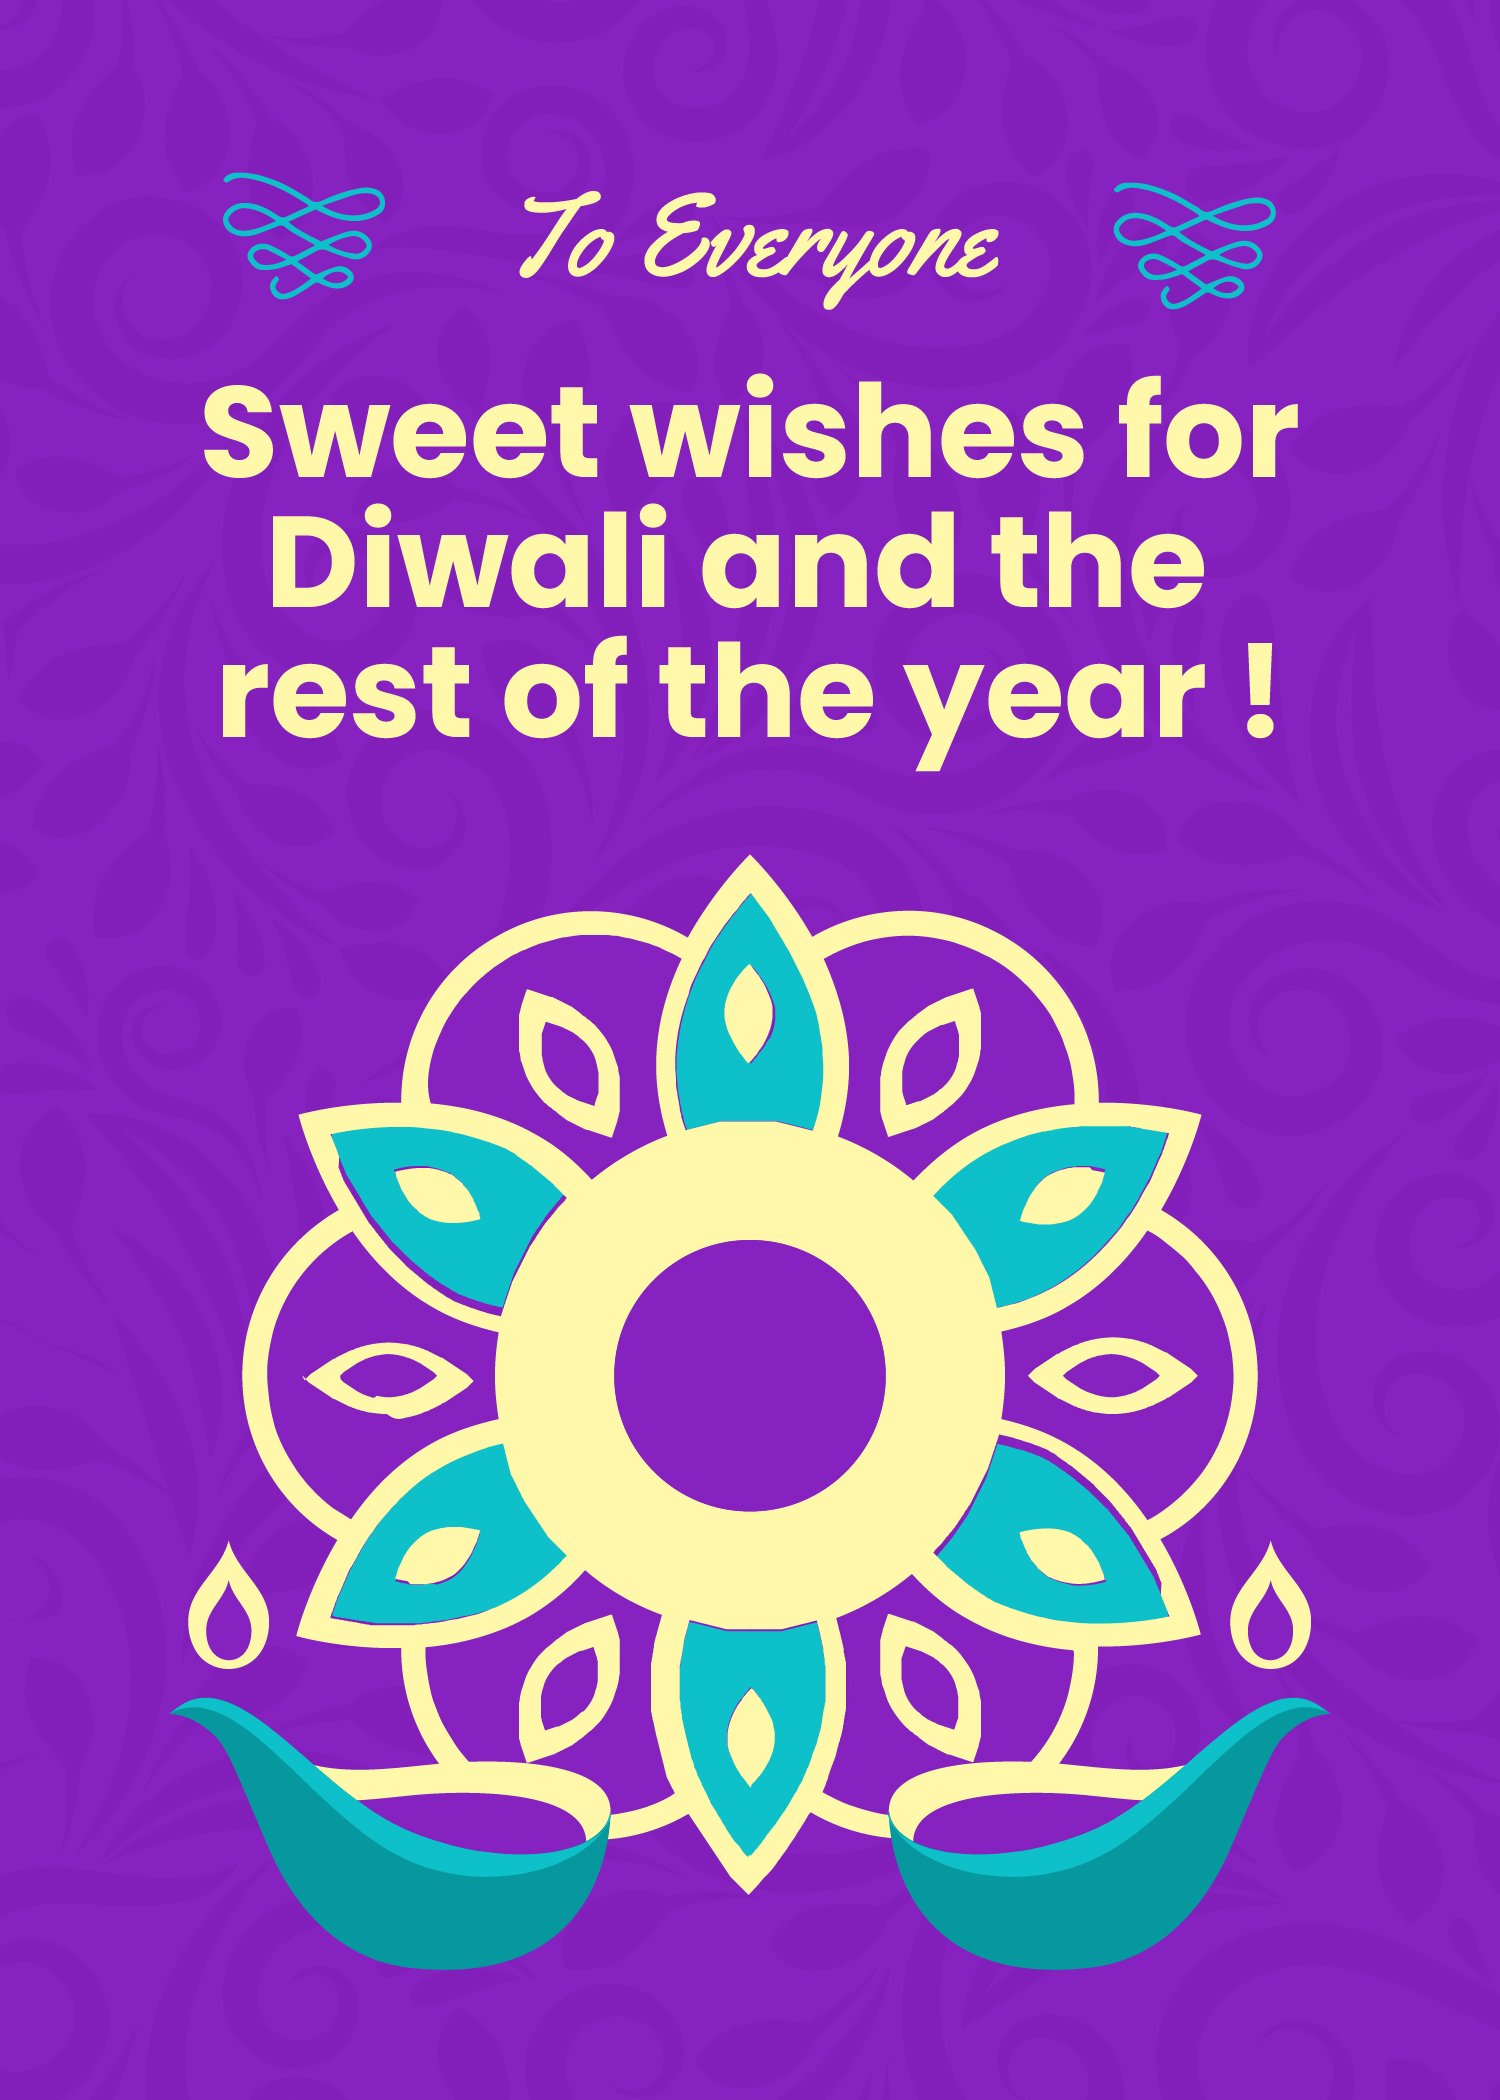 Free Diwali Wishes in Word, Google Docs, Illustrator, PSD, Apple Pages, Publisher, EPS, SVG, JPG, PNG